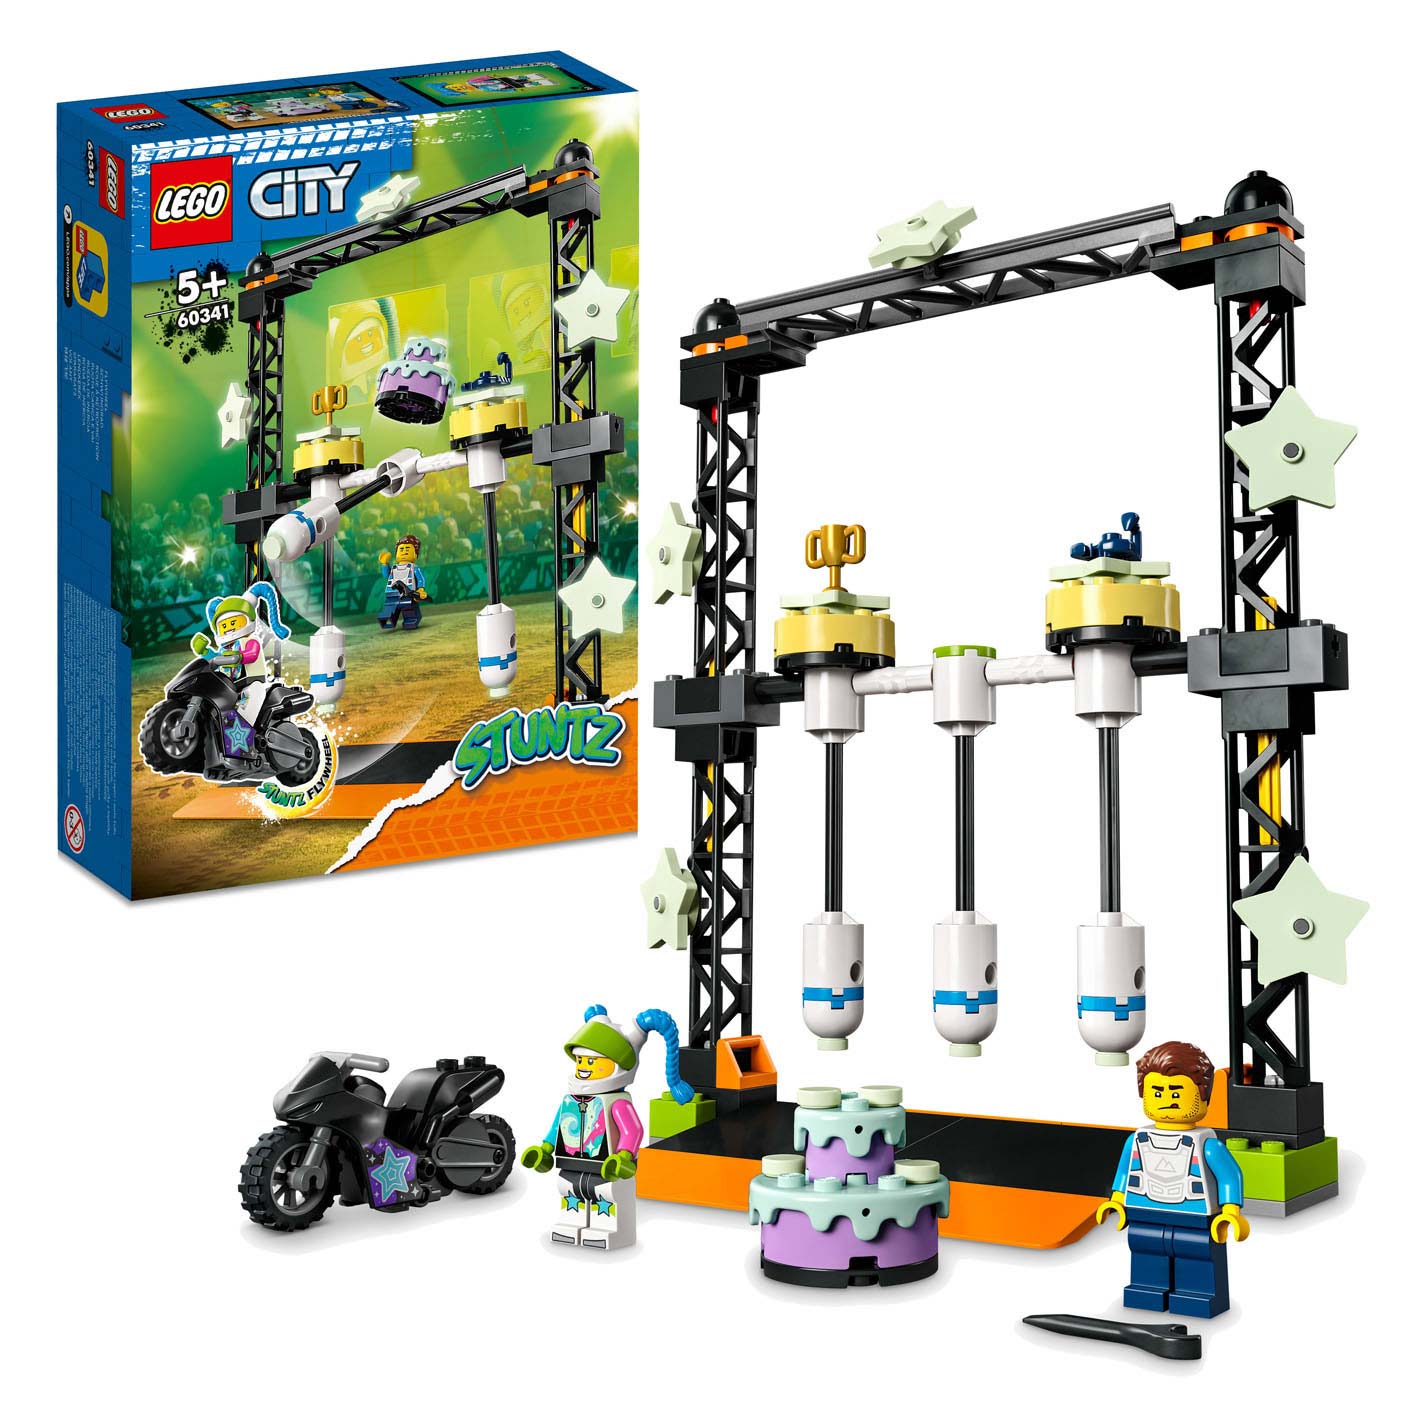 LEGO City 60341 Die Knockdown-Stunt-Challenge